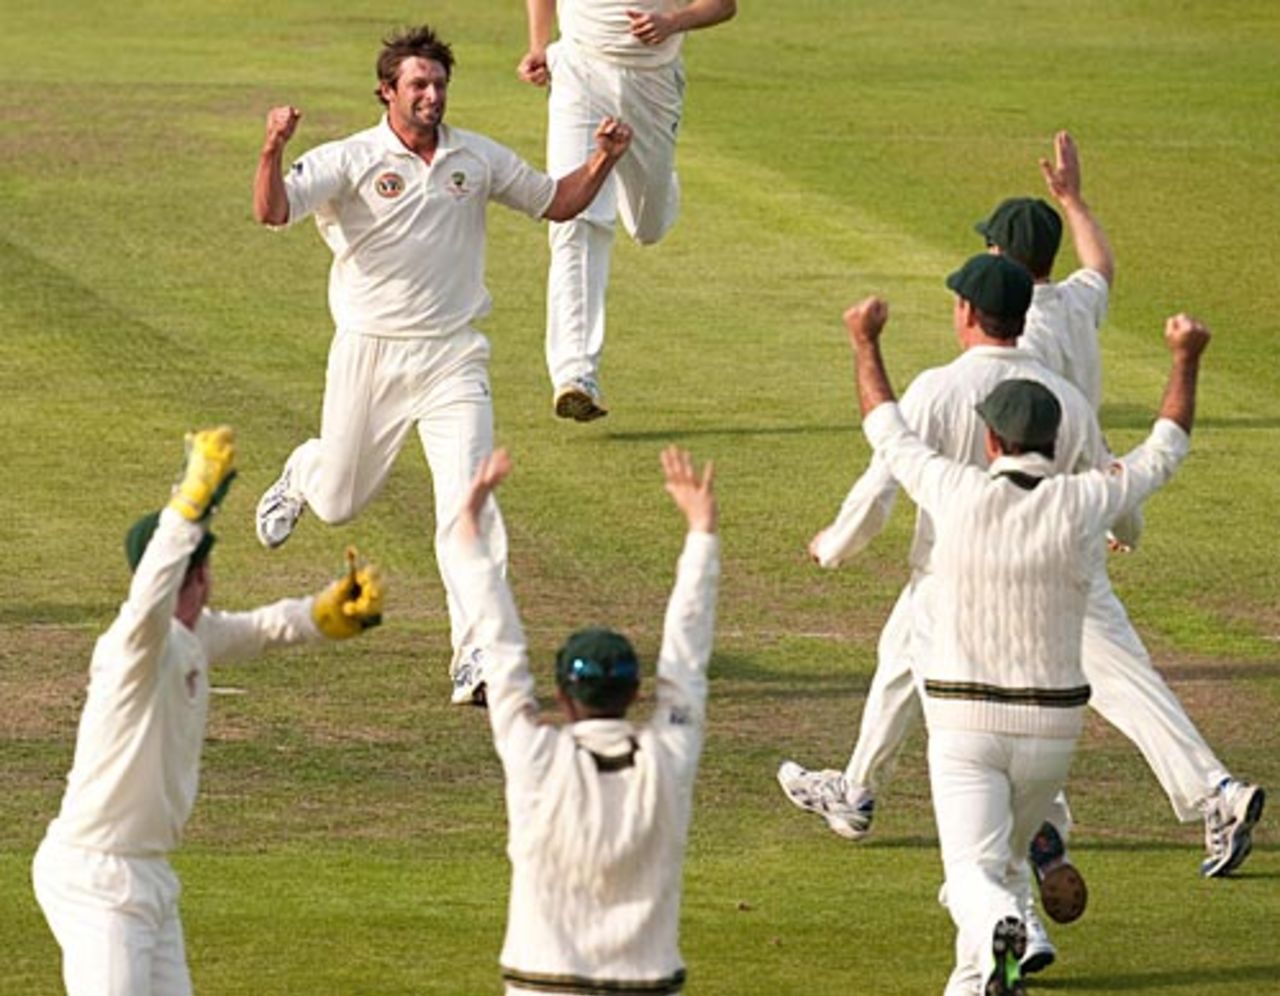 The Australians mob Ben Hilfenhaus after Ravi Bopara's wicket, England v Australia, 4th Test, Headingley, 2nd day, August 8, 2009